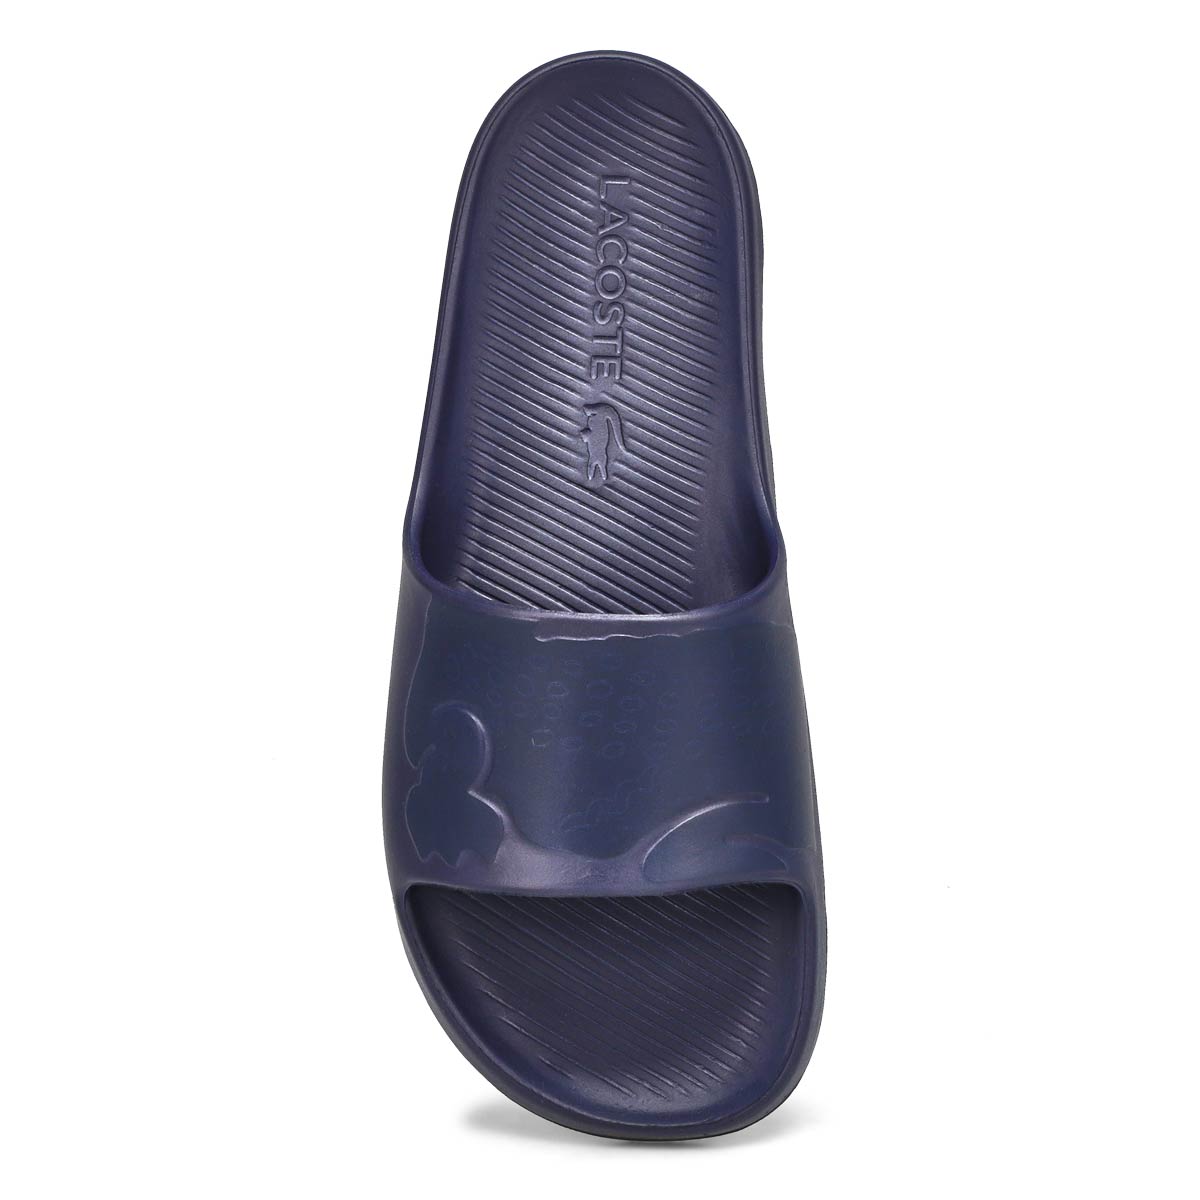 Men's Croco 2.0 Slide Sandal - Navy/Navy